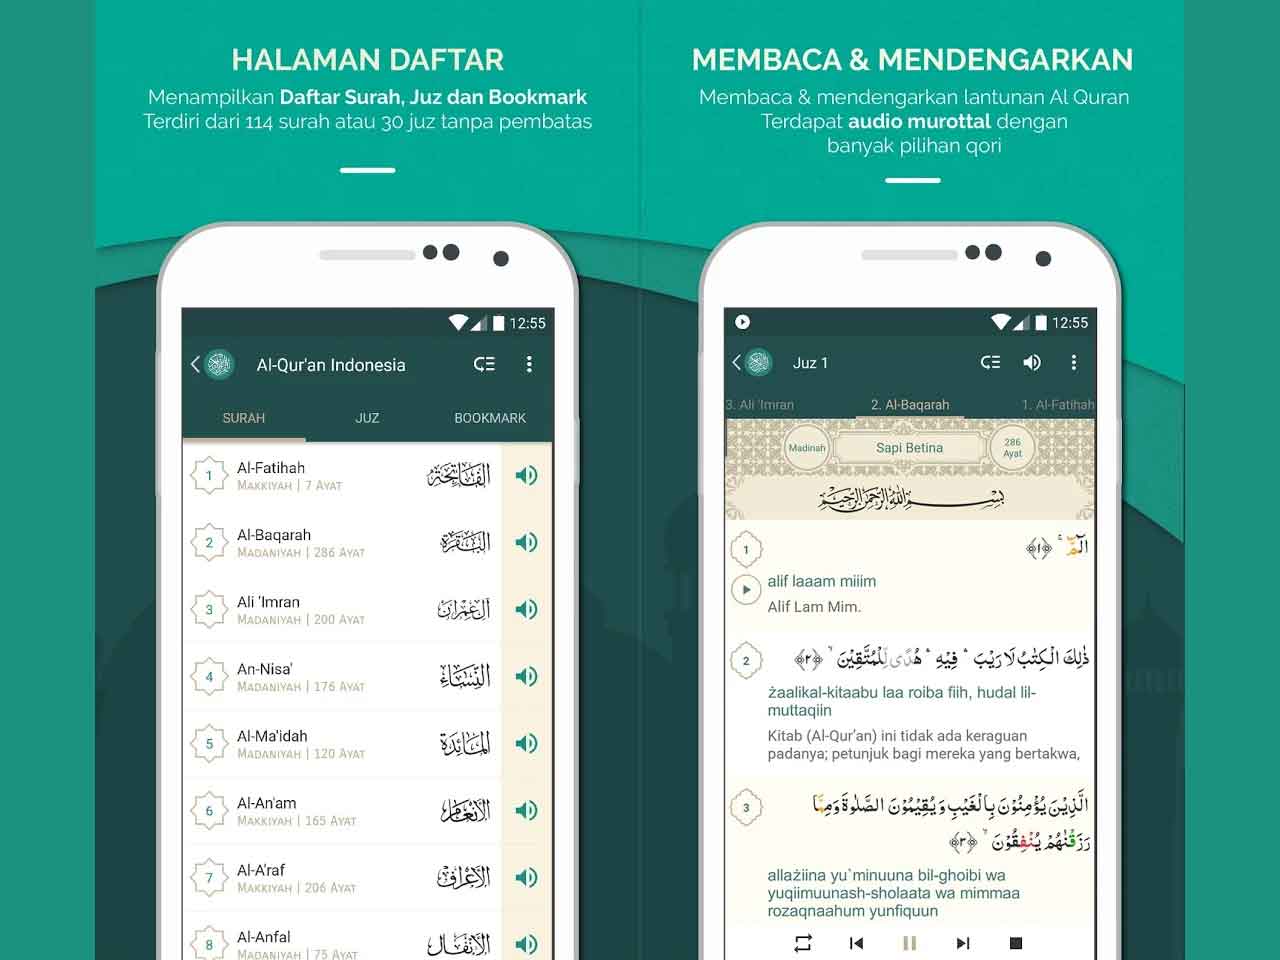 Download Aplikasi Quran E633333 : Gimana? lumayan kan? aplikasi ini